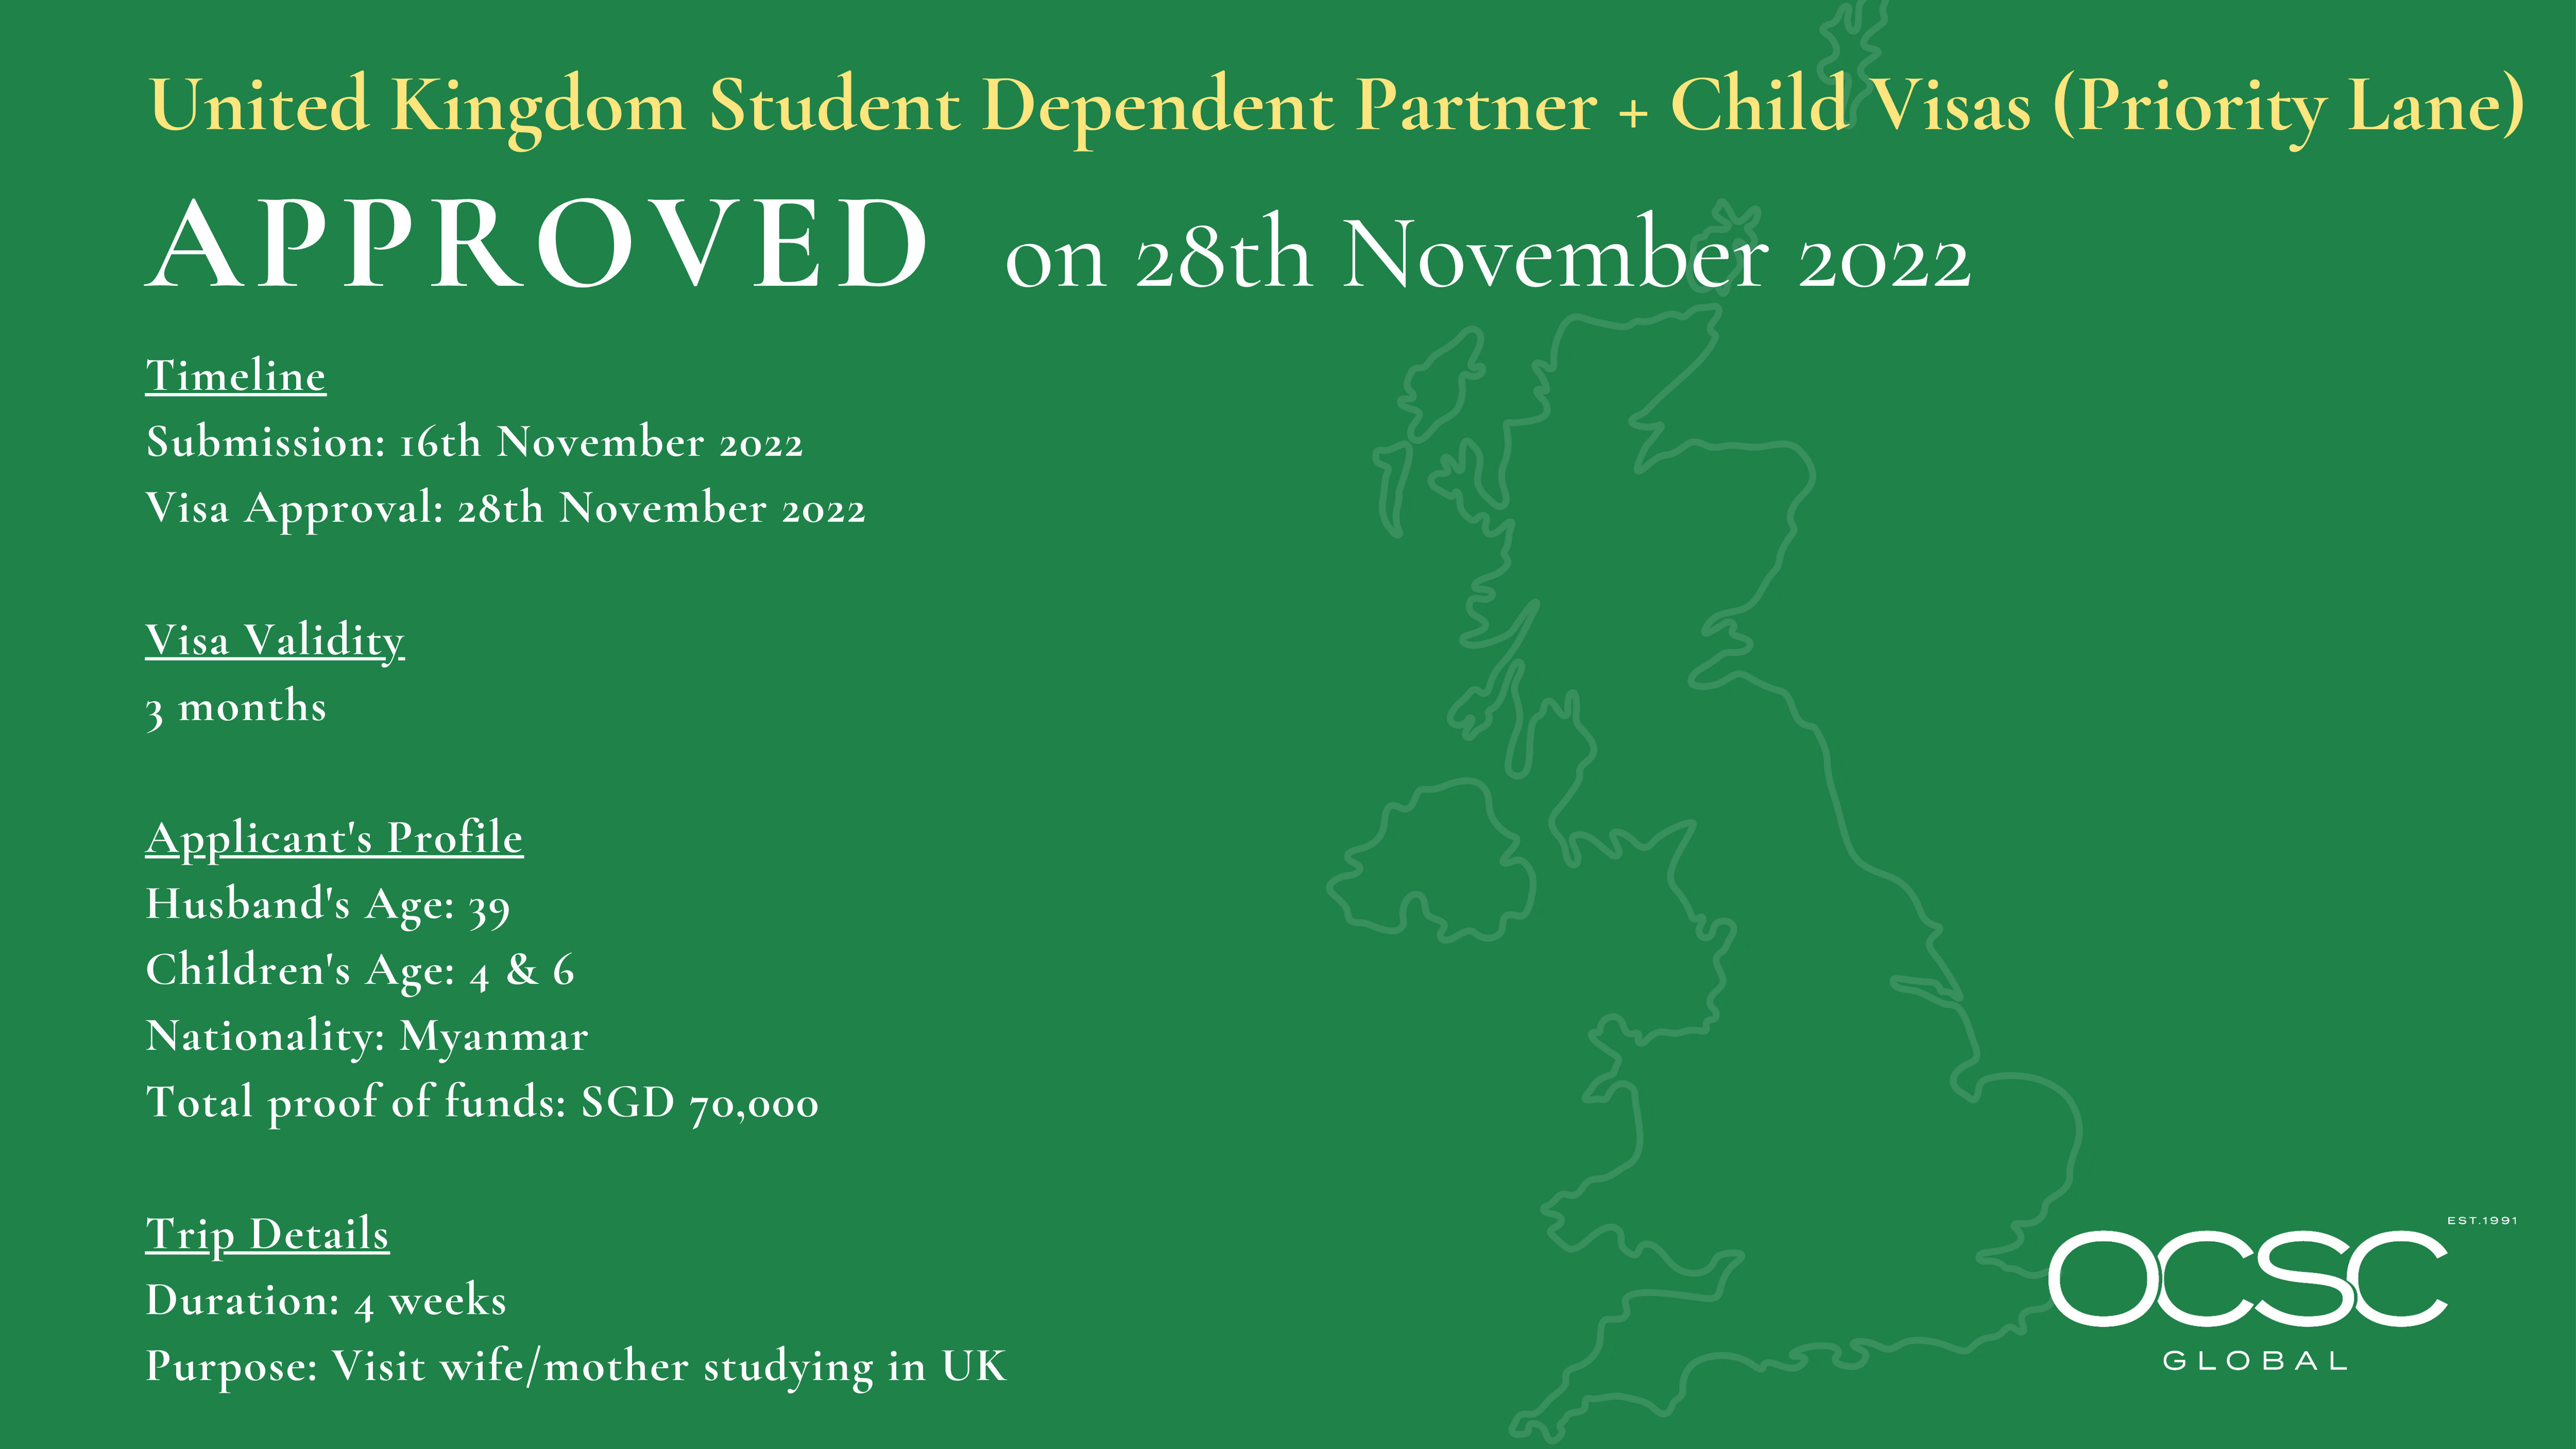 Approval for United Kingdom Student Dependent Partner + Child Visas (Priority Lane)